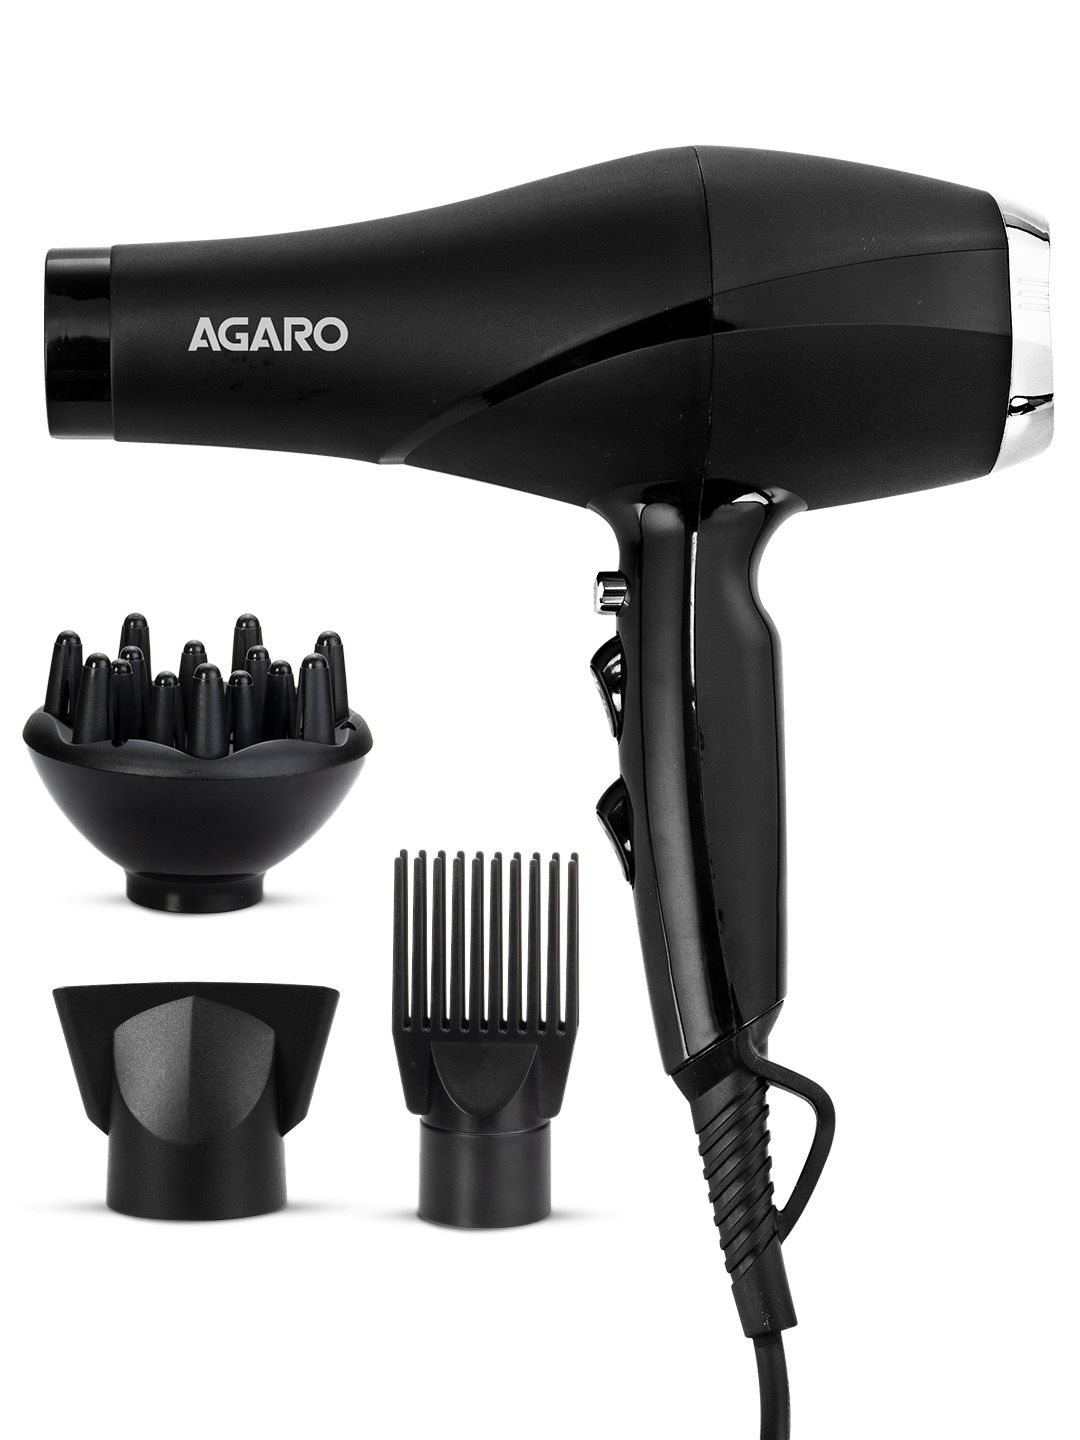 Agaro HD-1120 Professional 2000 Watts Hair Dryer with 3 Temperature Settings - Black